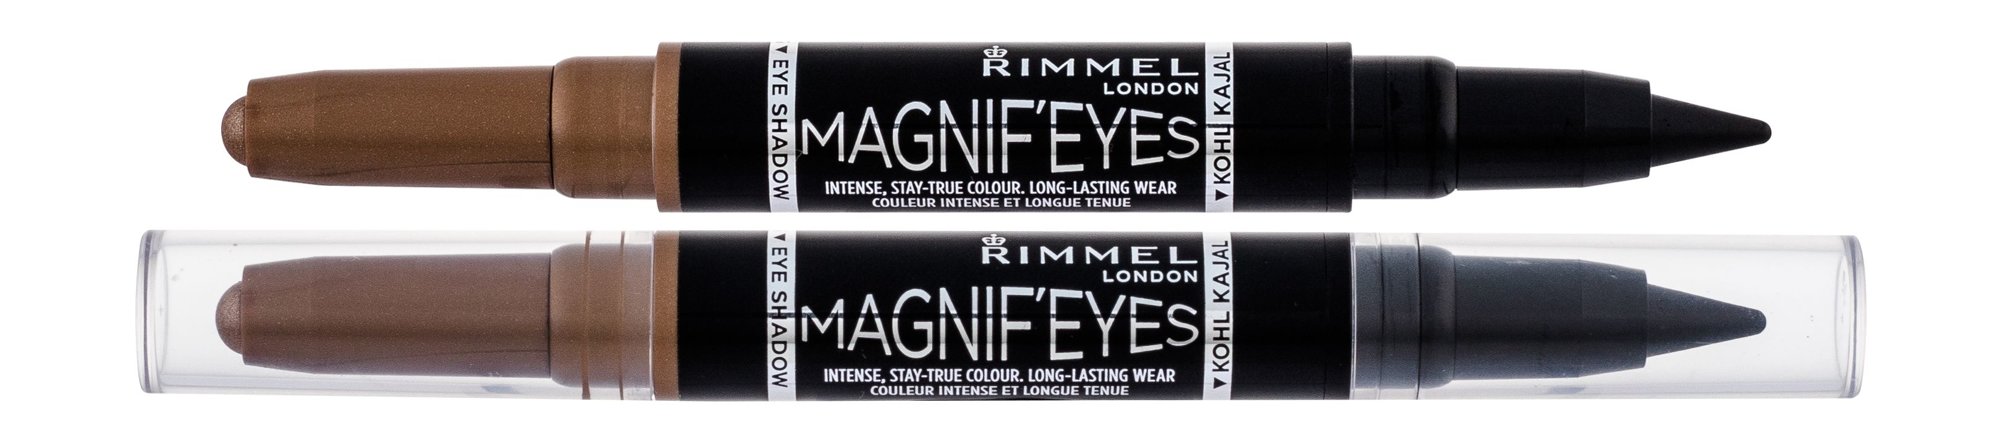 Rimmel London Magnif Eyes šešėliai